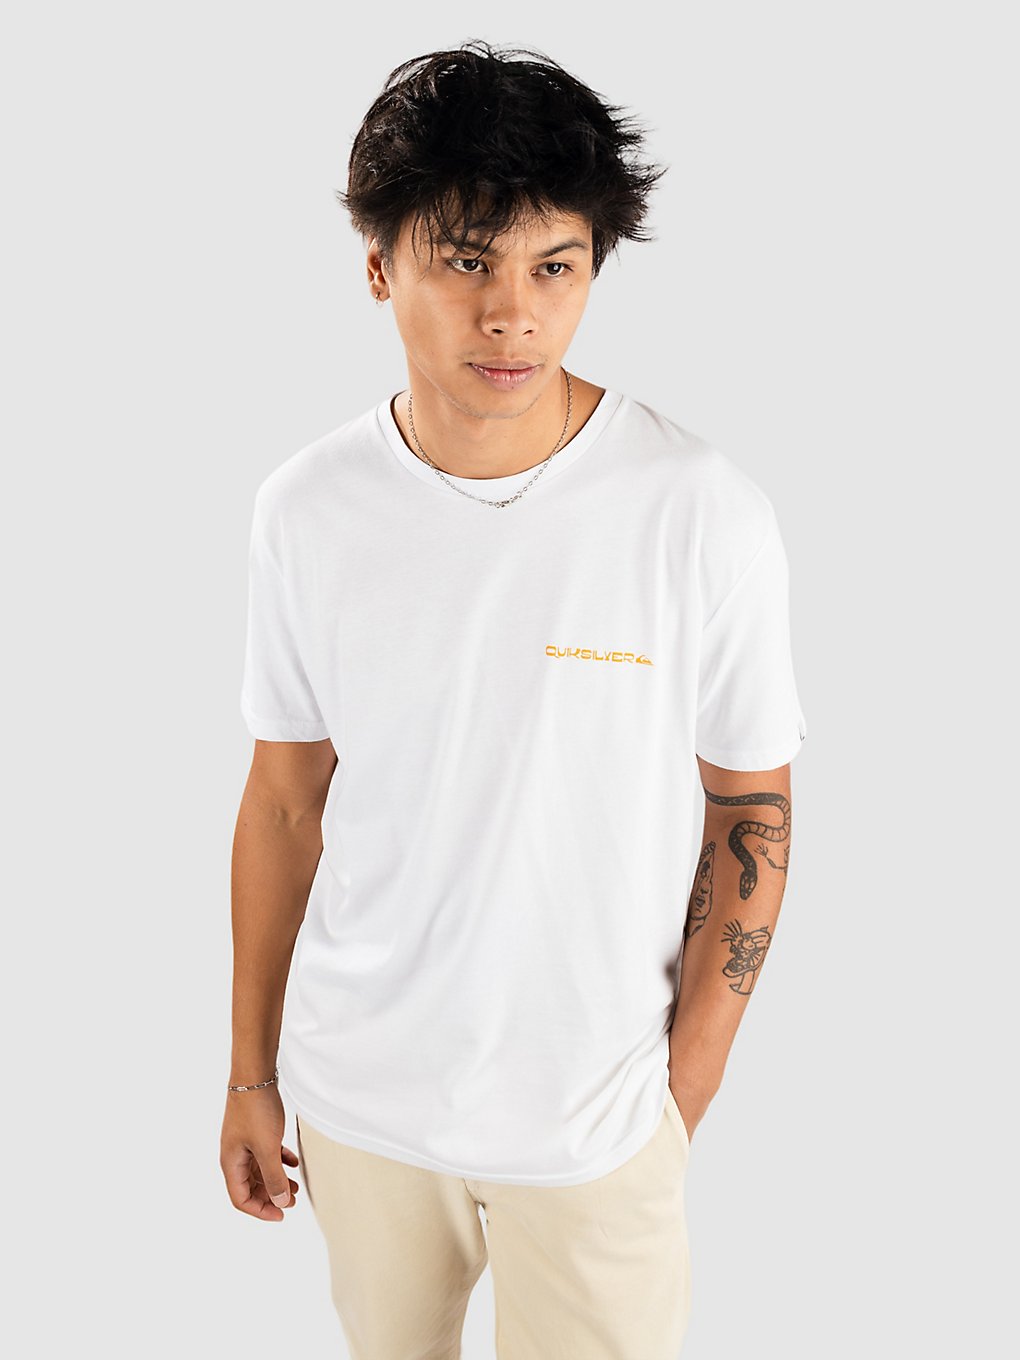 Quiksilver Weird Trip T-Shirt white kaufen